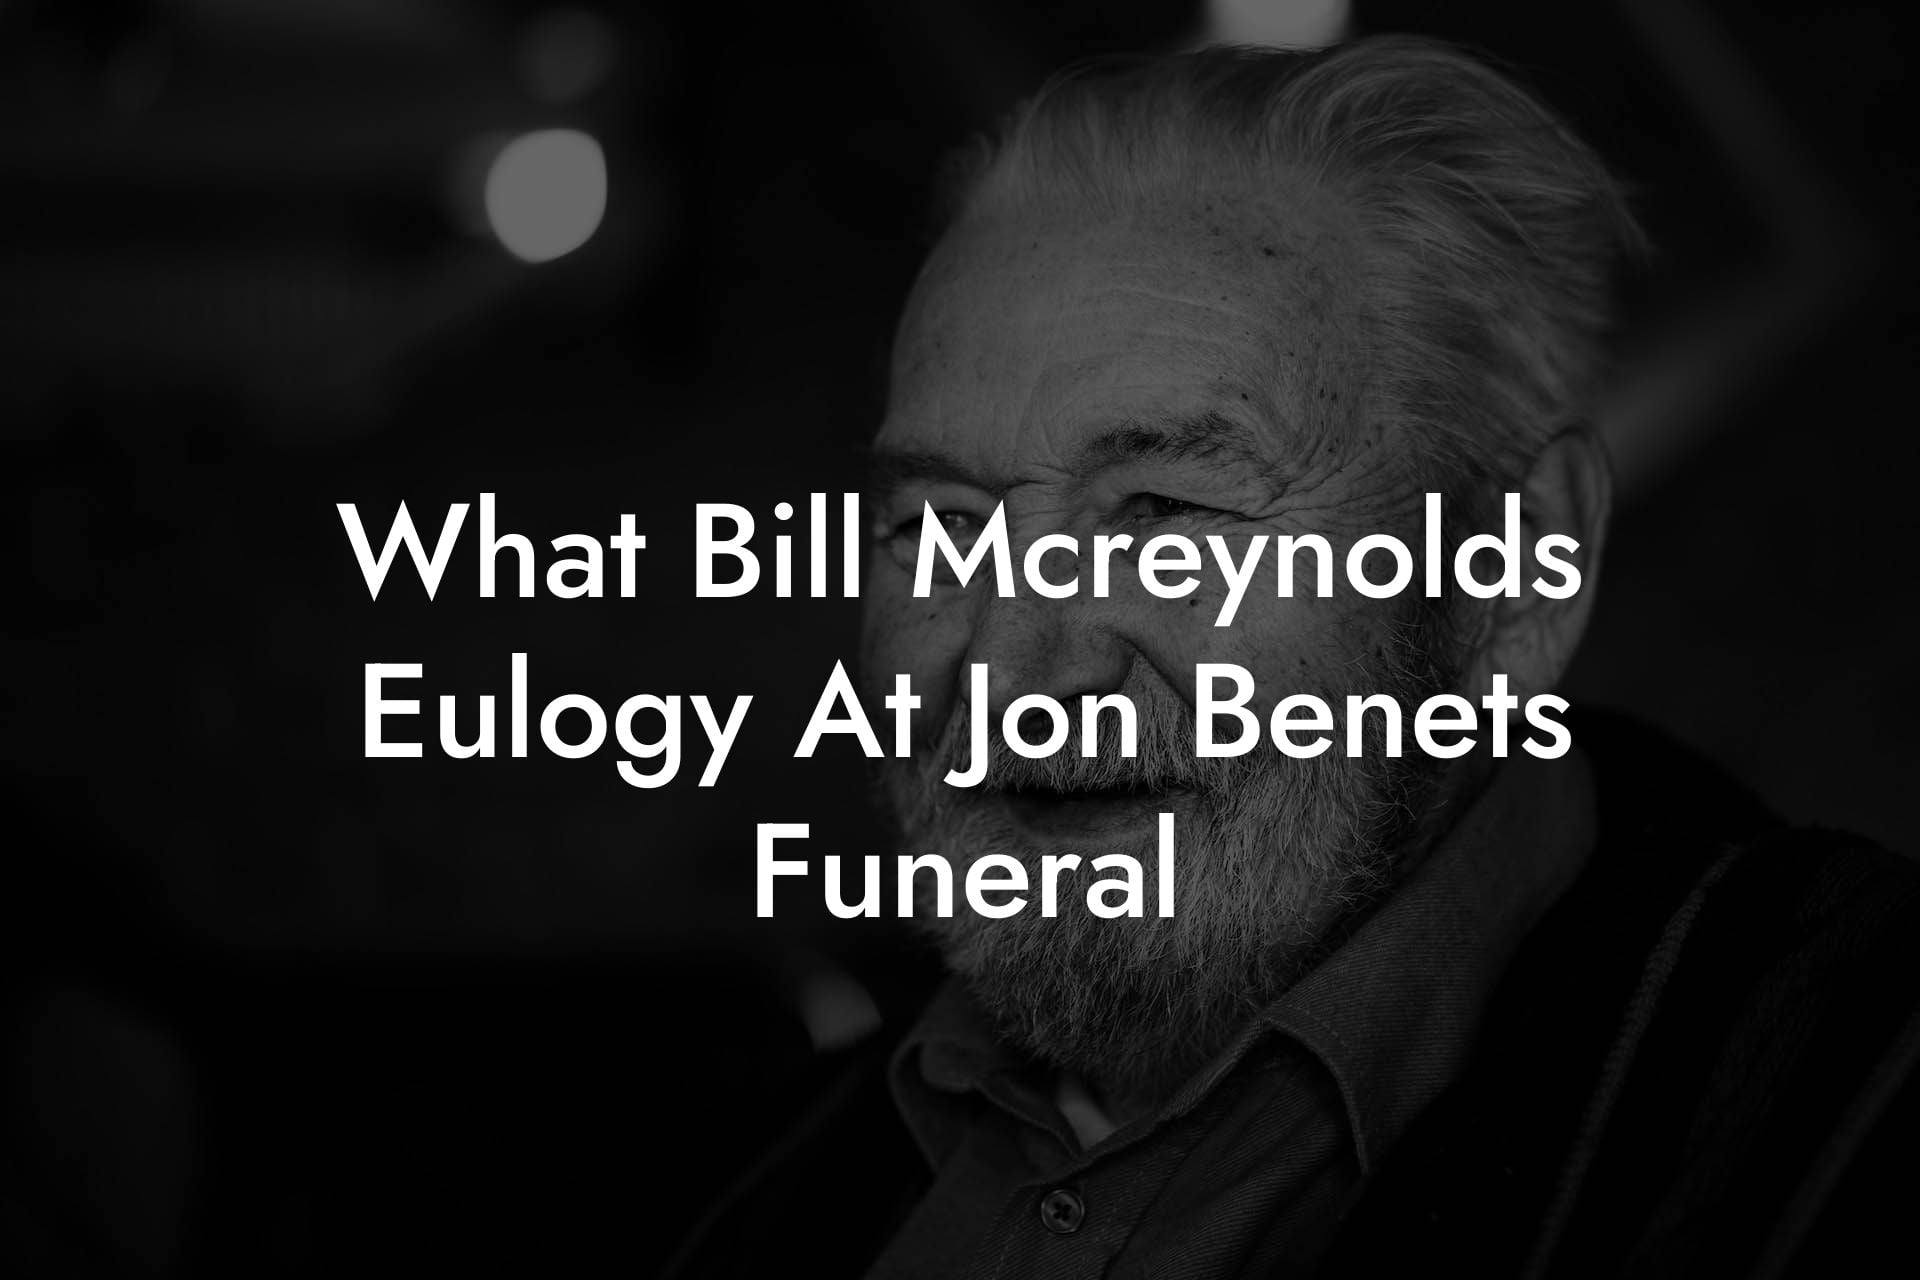 What Bill Mcreynolds Eulogy At Jon Benets Funeral